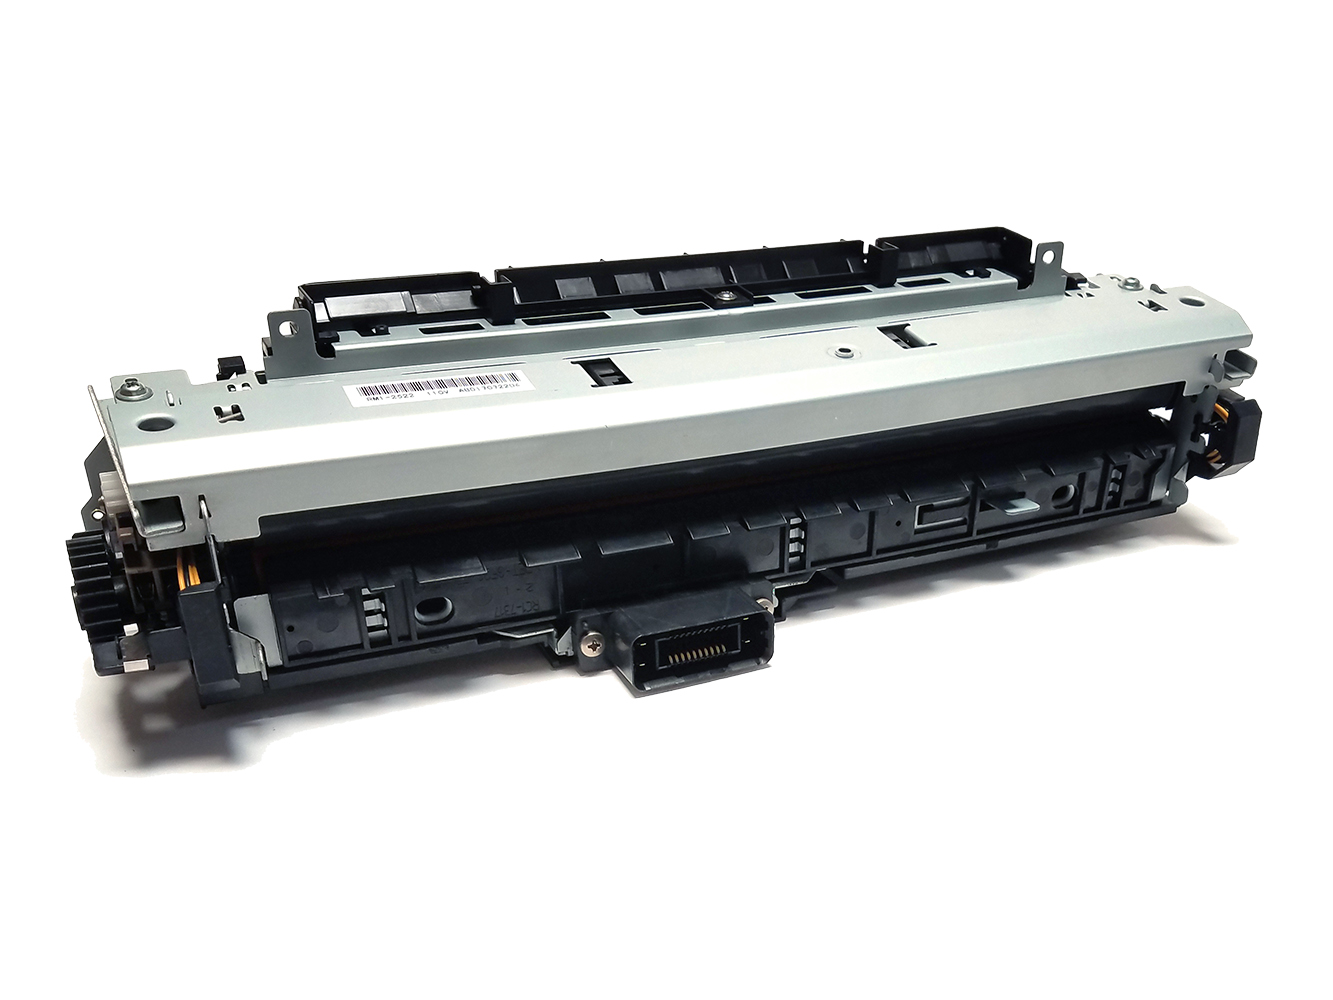 Altru Print Q7832A-MK-AP (Q7832-67901) Maintenance Kit for HP Laserjet M5025 / M5035 (110V) Includes RM1-3007 Fuser, Transfer Roller & Tray 1-6 Rollers - image 2 of 8